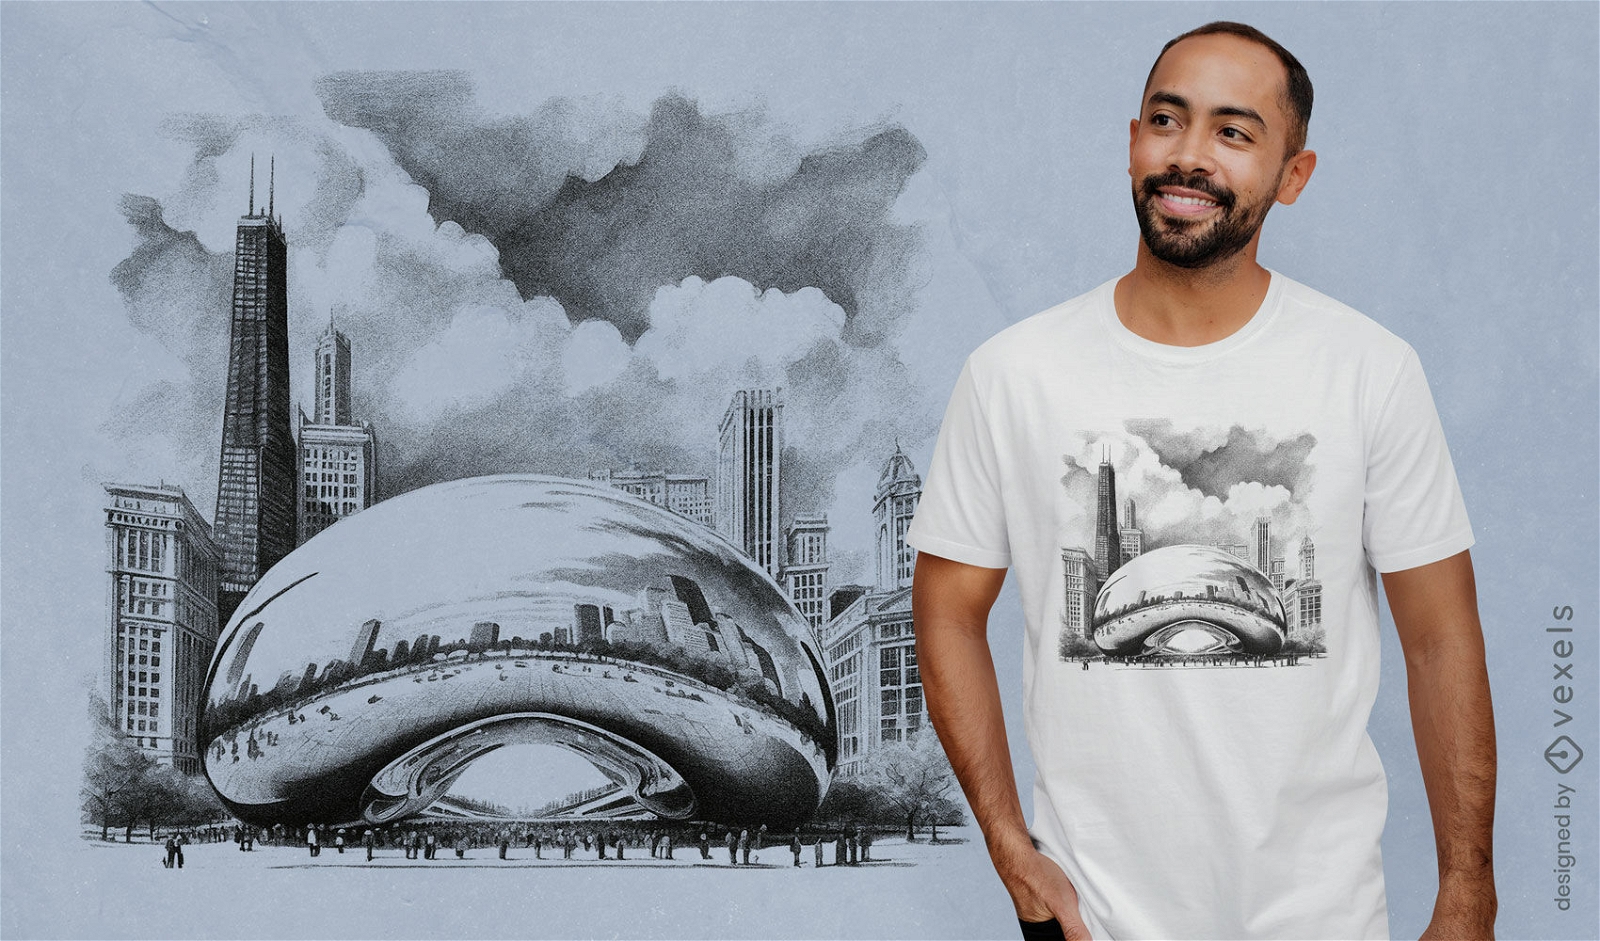 Chicago Cloud Gate sketch t-shirt design